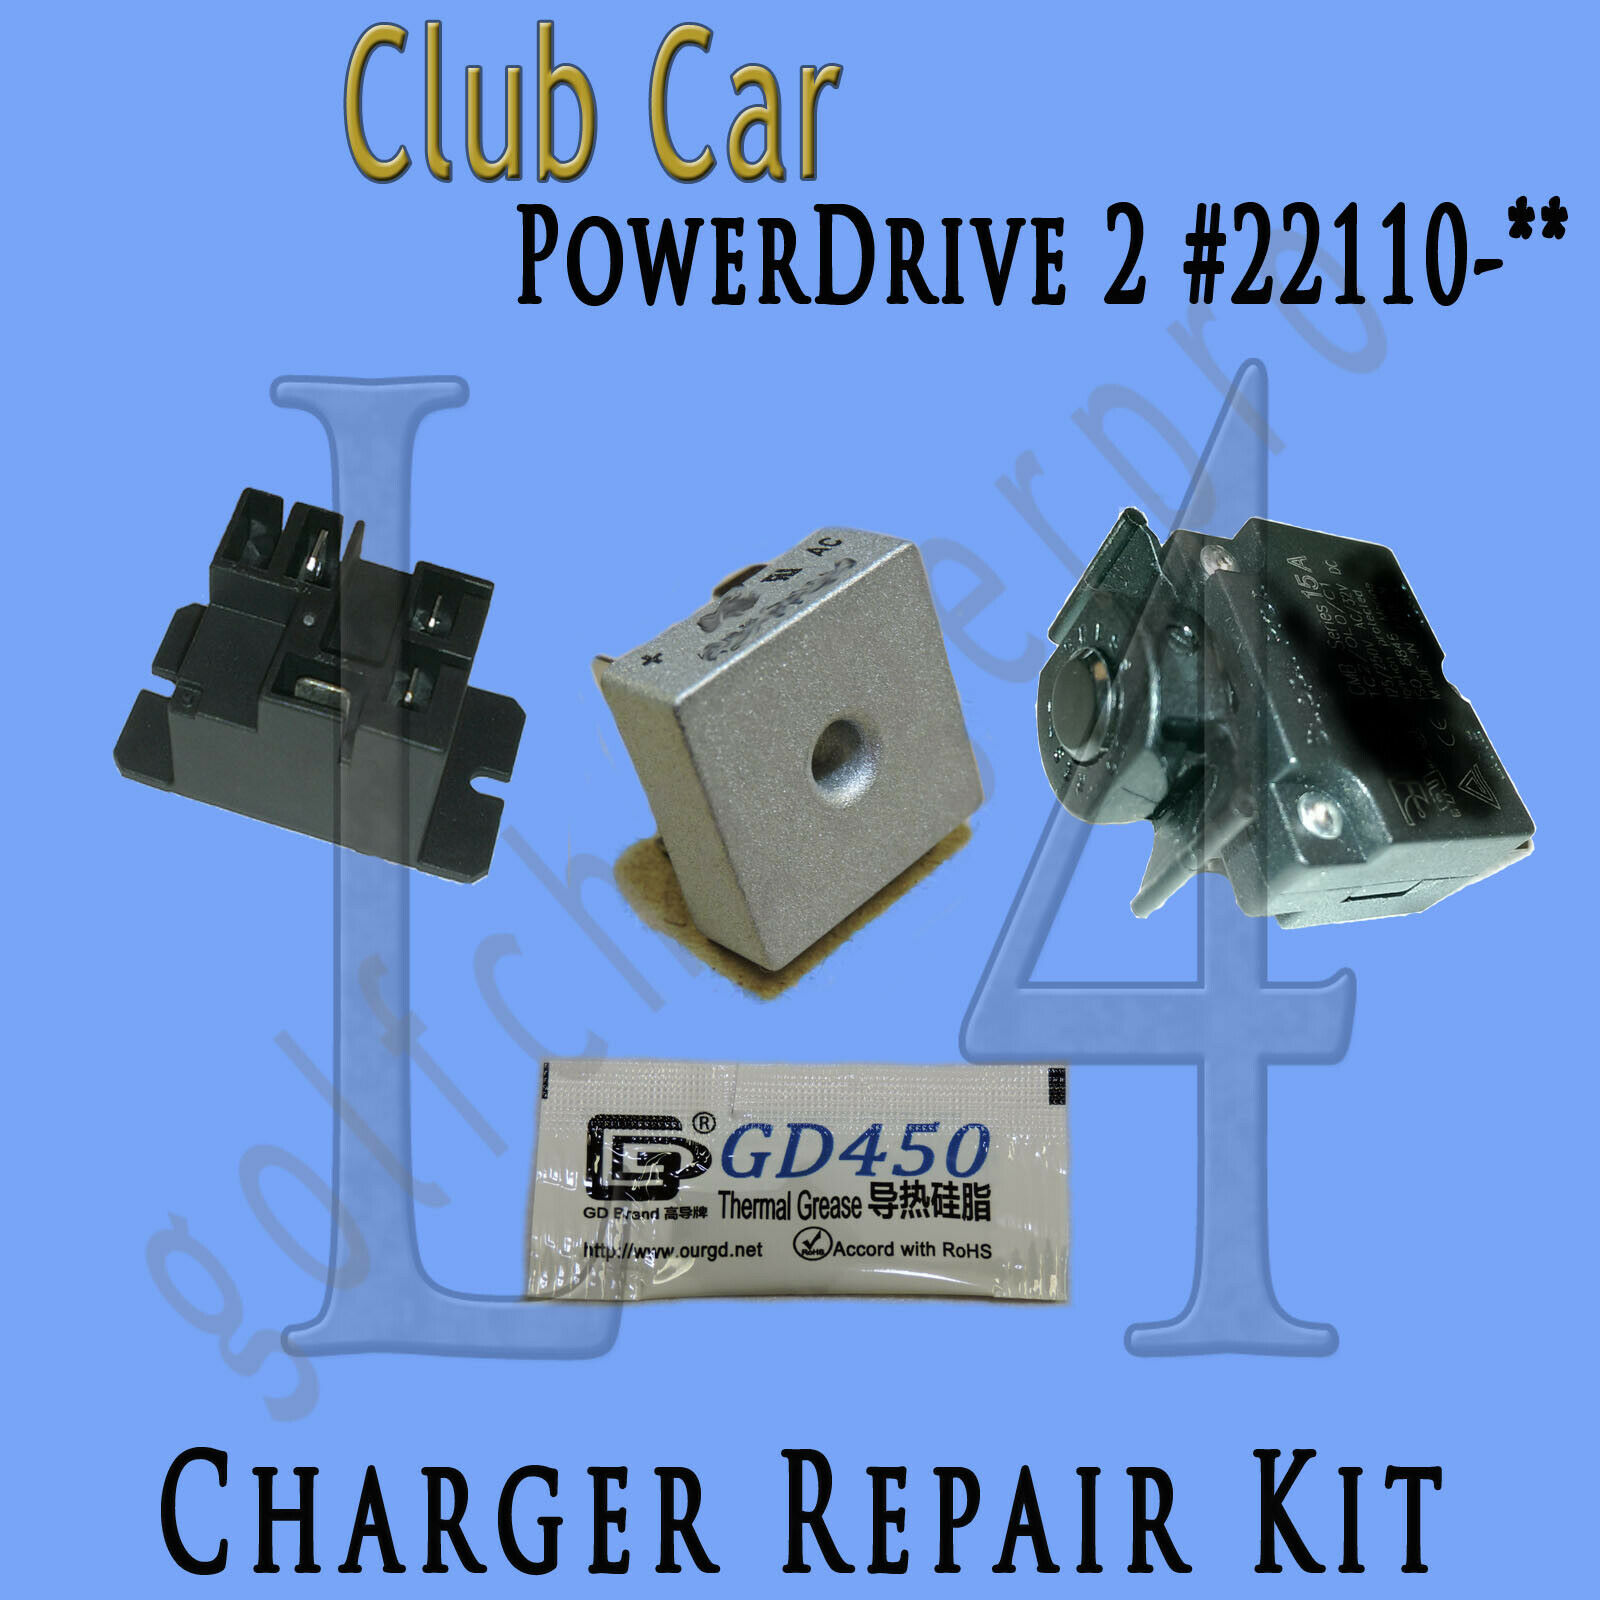 Golf Cart 48 Volt Charger Repair Kit For Club Car Powerdrive 2 #22110